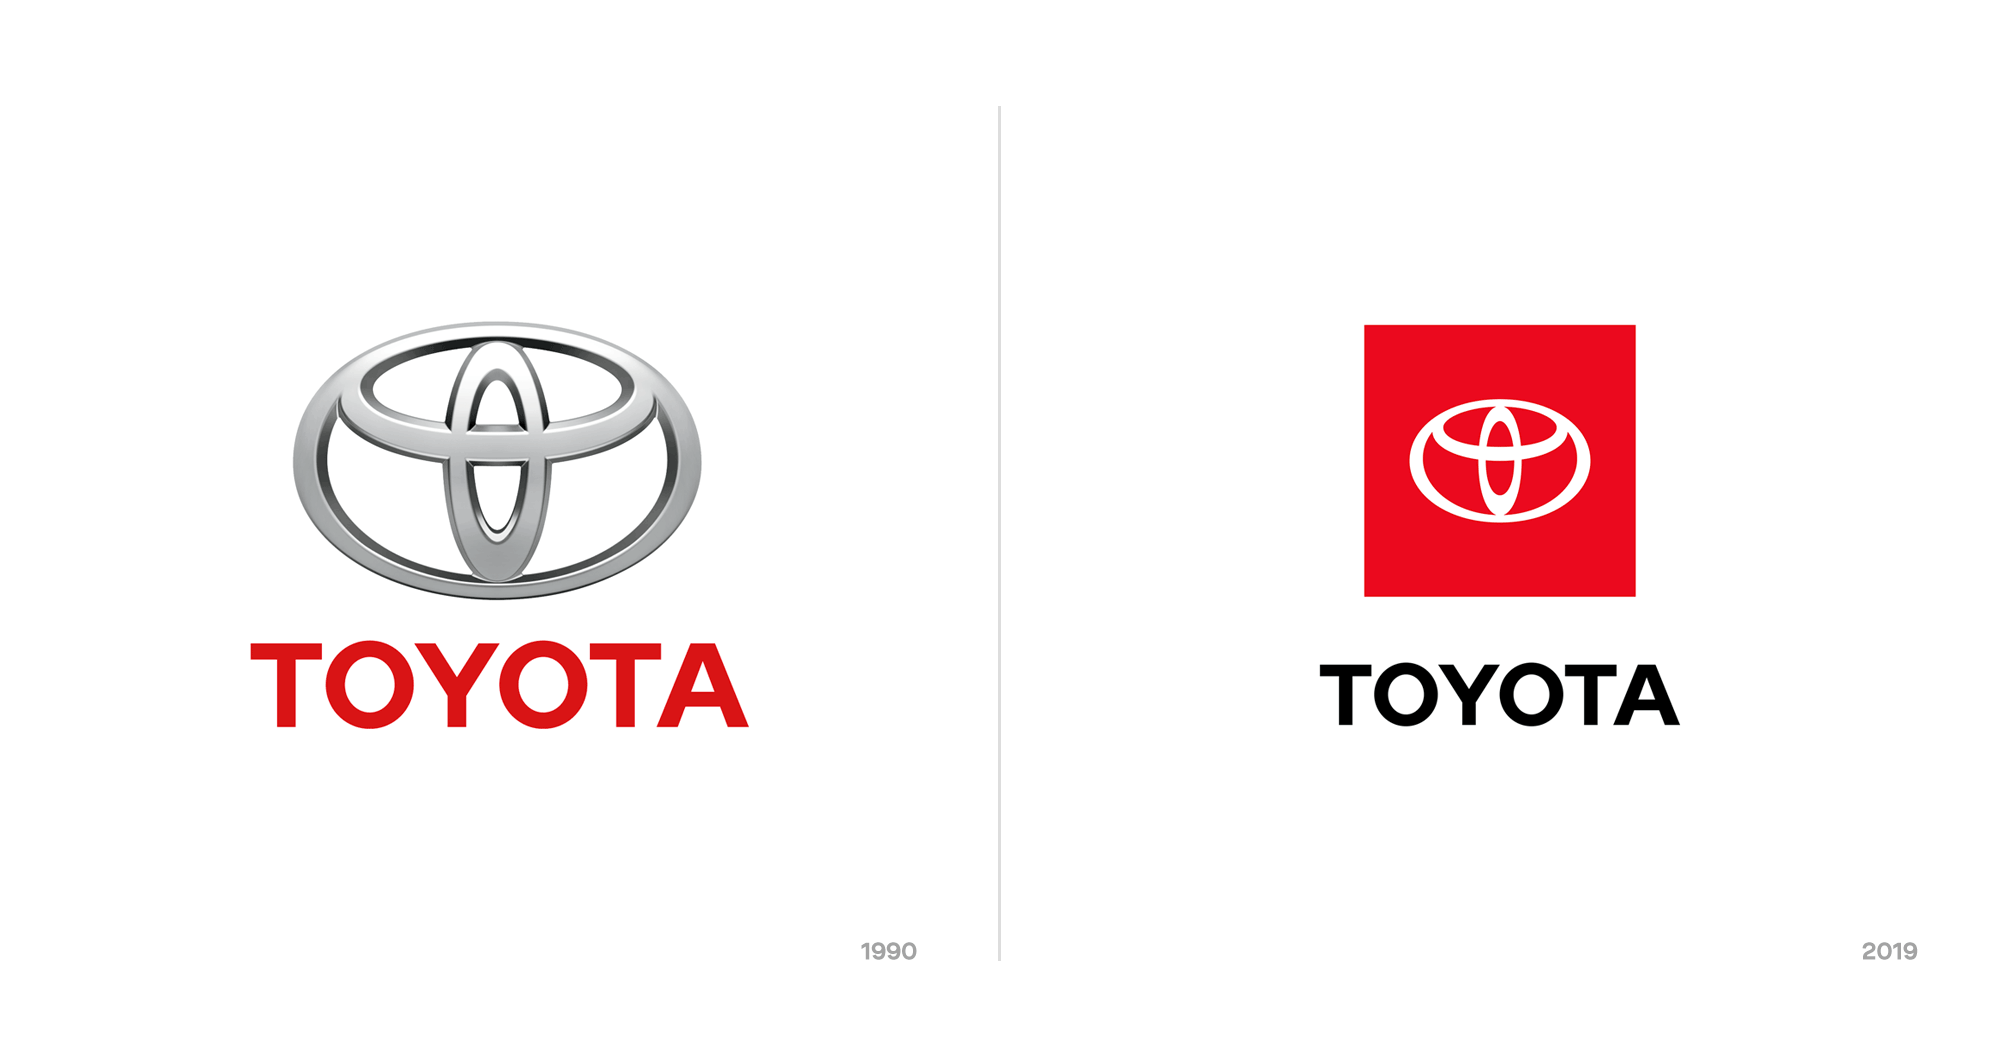 logo Toyota histoire succès story